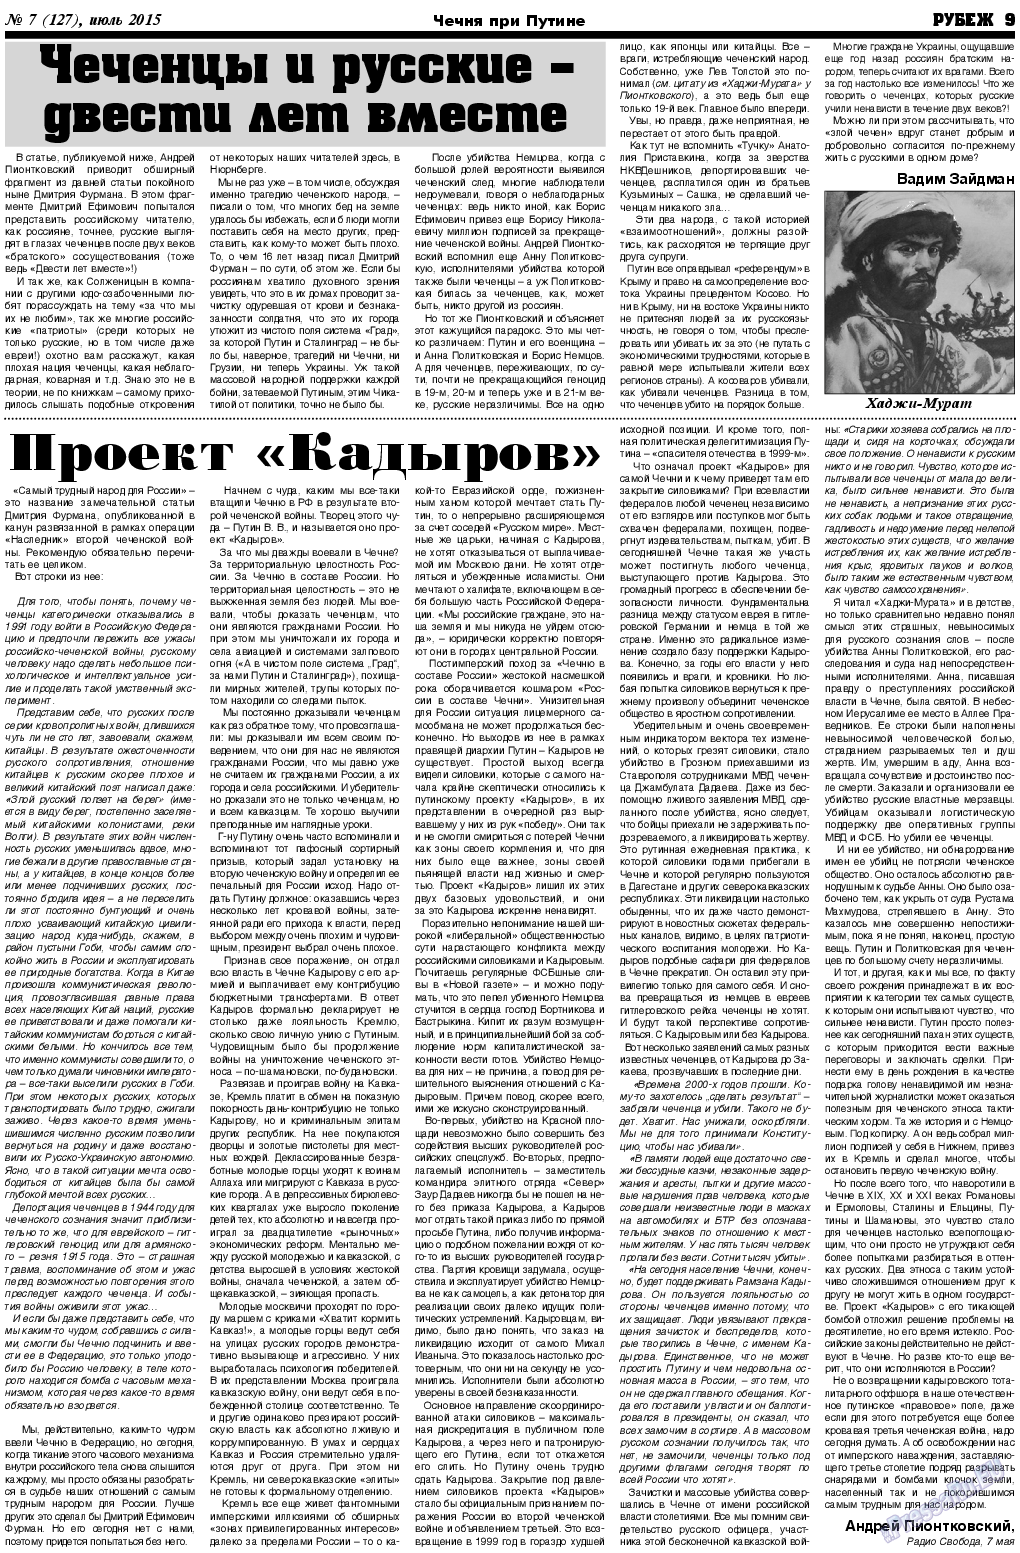 Рубеж, газета. 2015 №7 стр.9